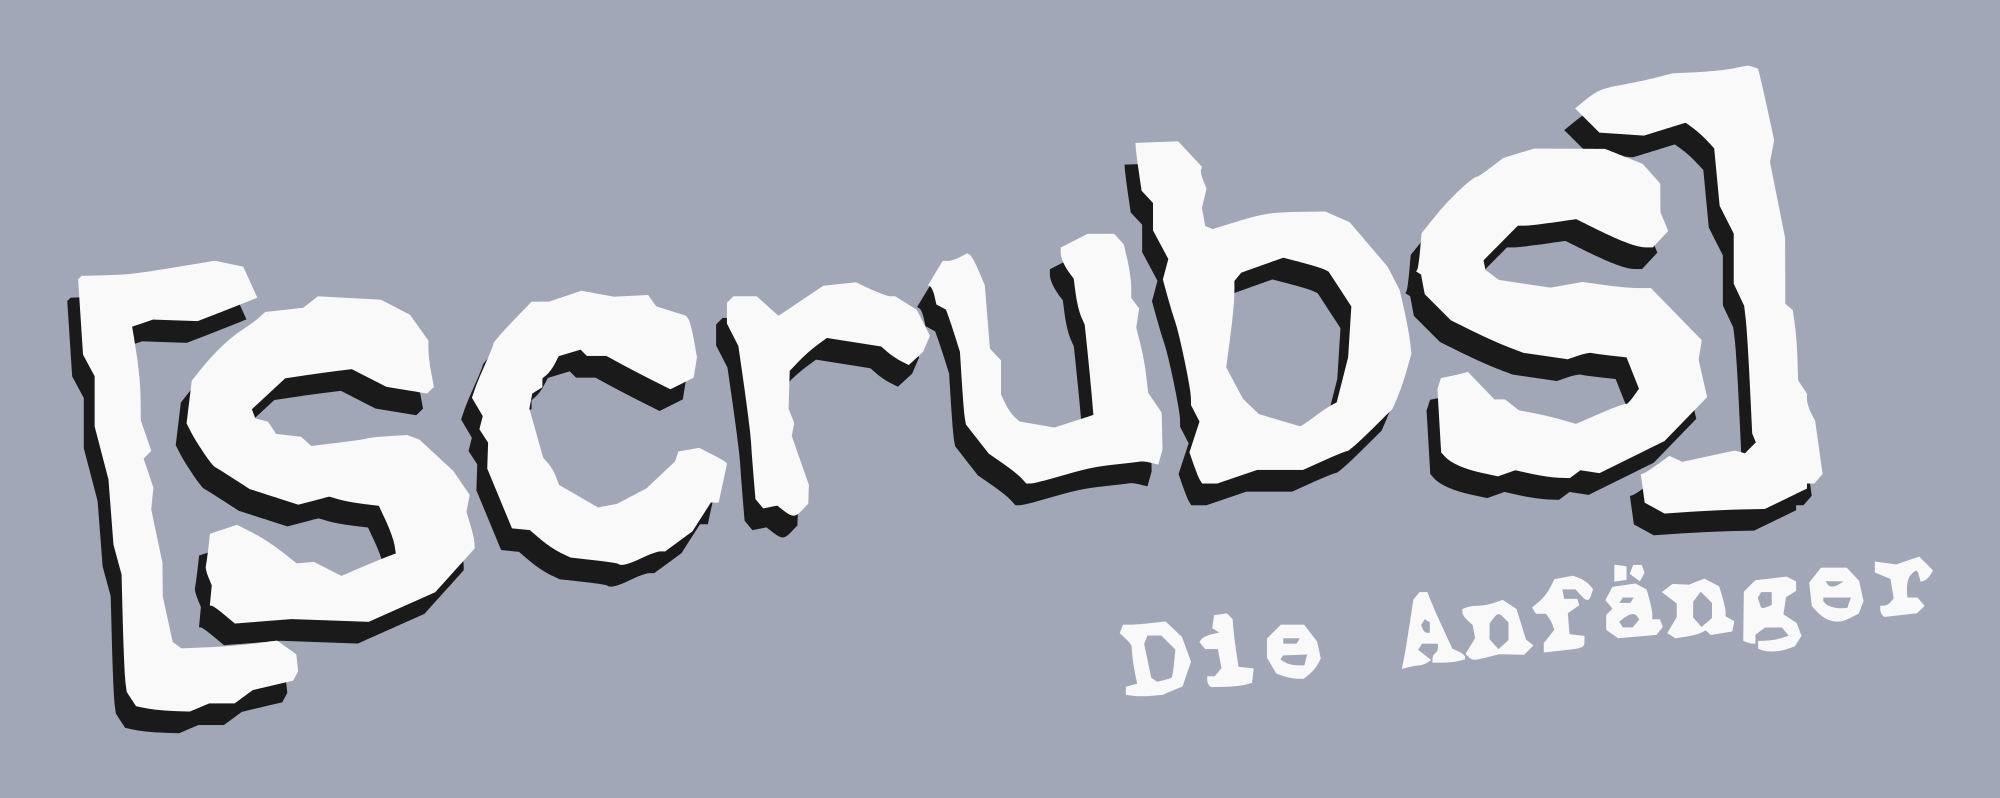 Scrubs Logo - File:Scrubs-logo-deutsch.svg - Wikimedia Commons